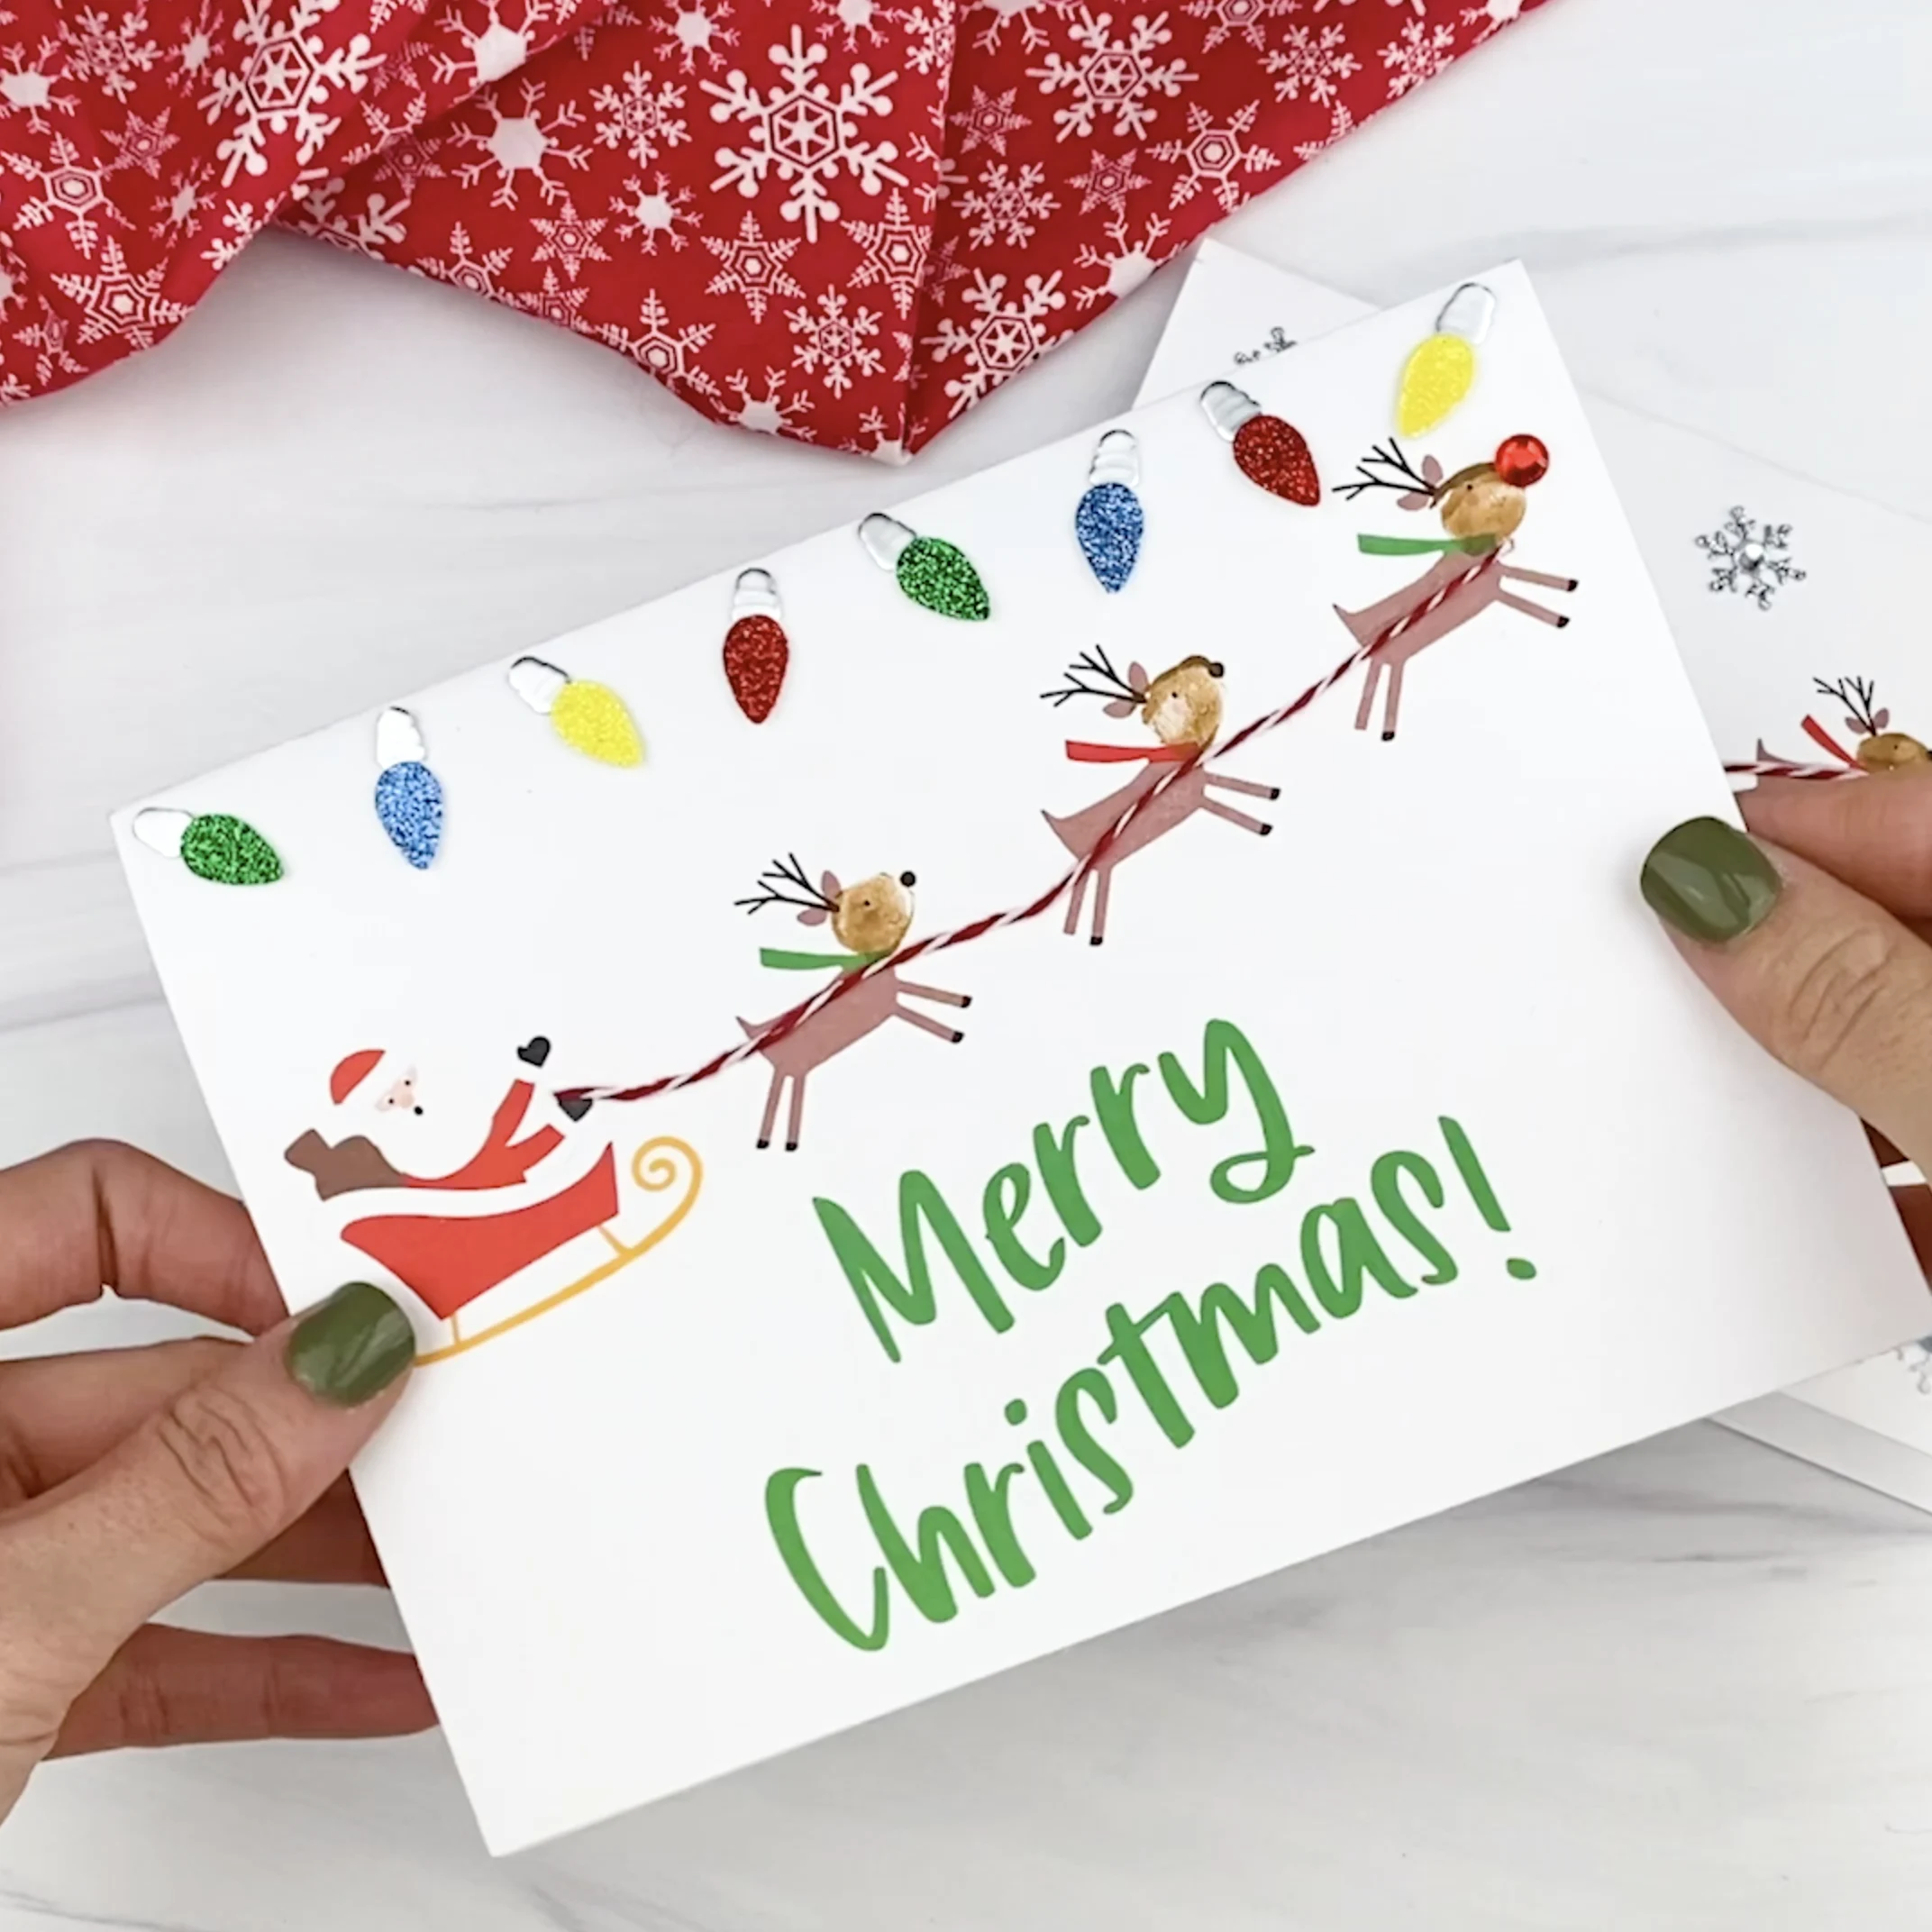 Homemade Christmas cards - Santa and reindeer